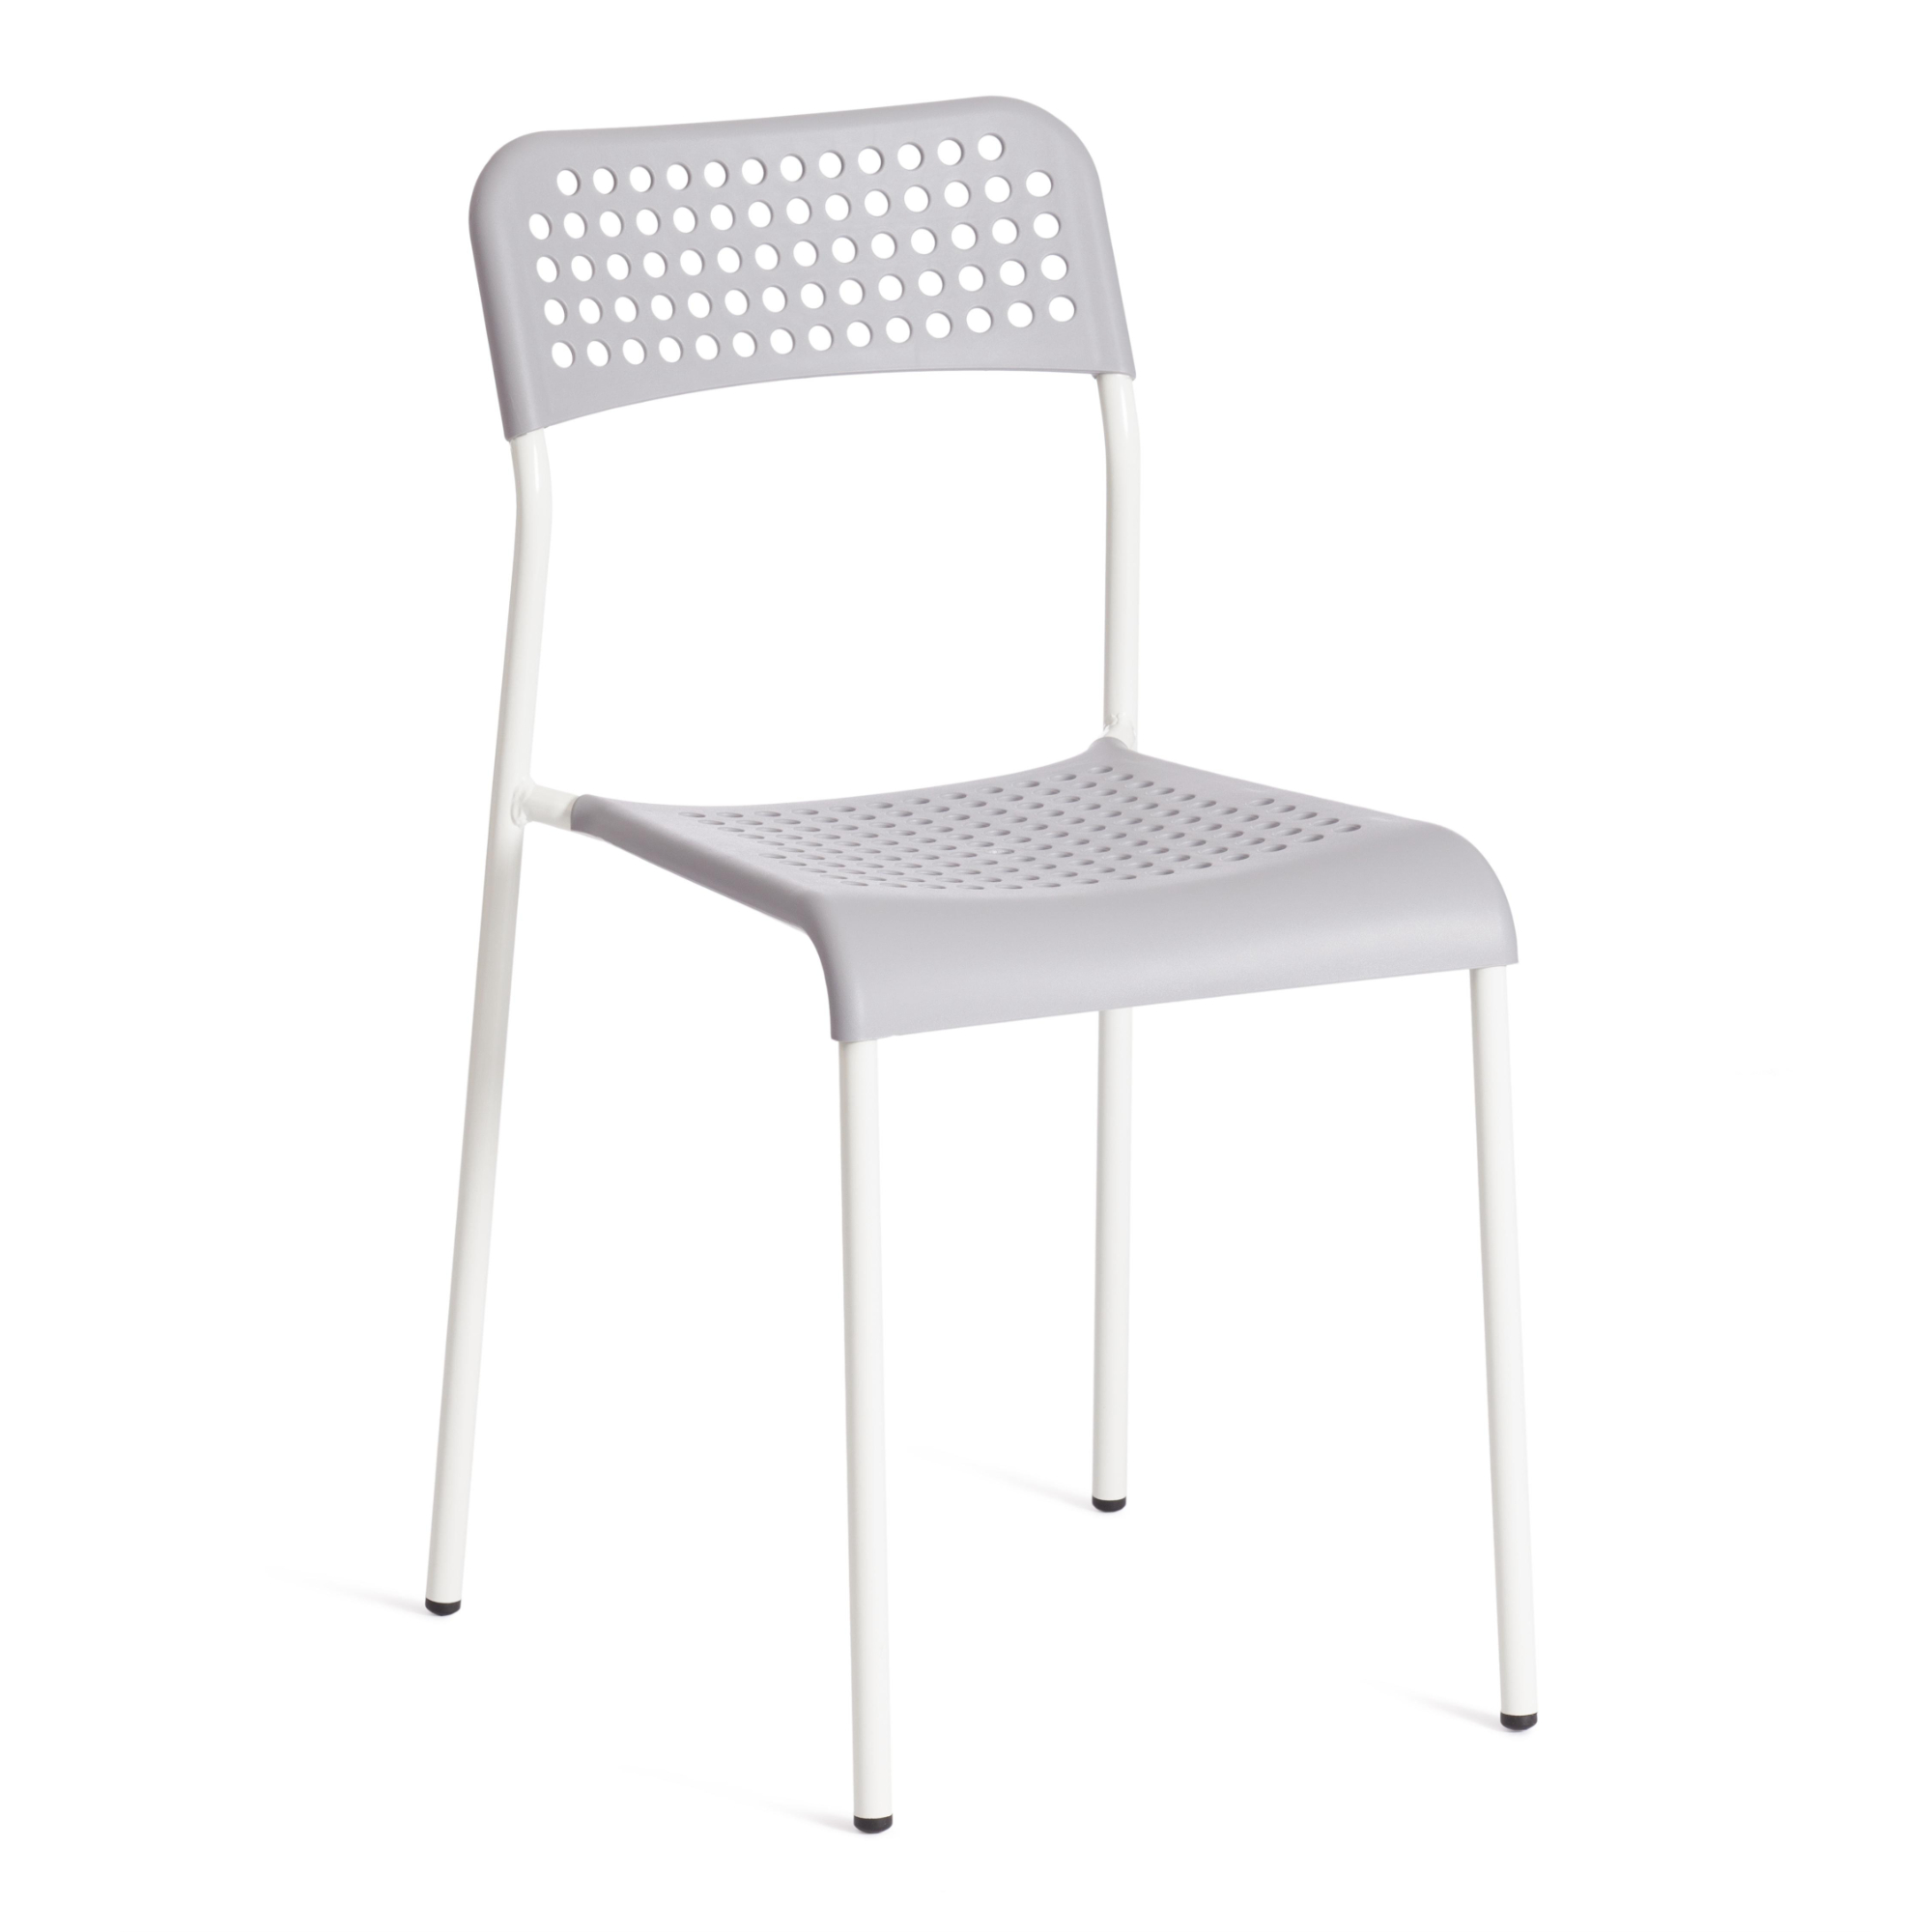 Стул ТС Adde серый пластиковый с металлическими ножками 39х49х78 см стул тс cindy chair пластиковый с ножками из бука белый 45х51х82 см